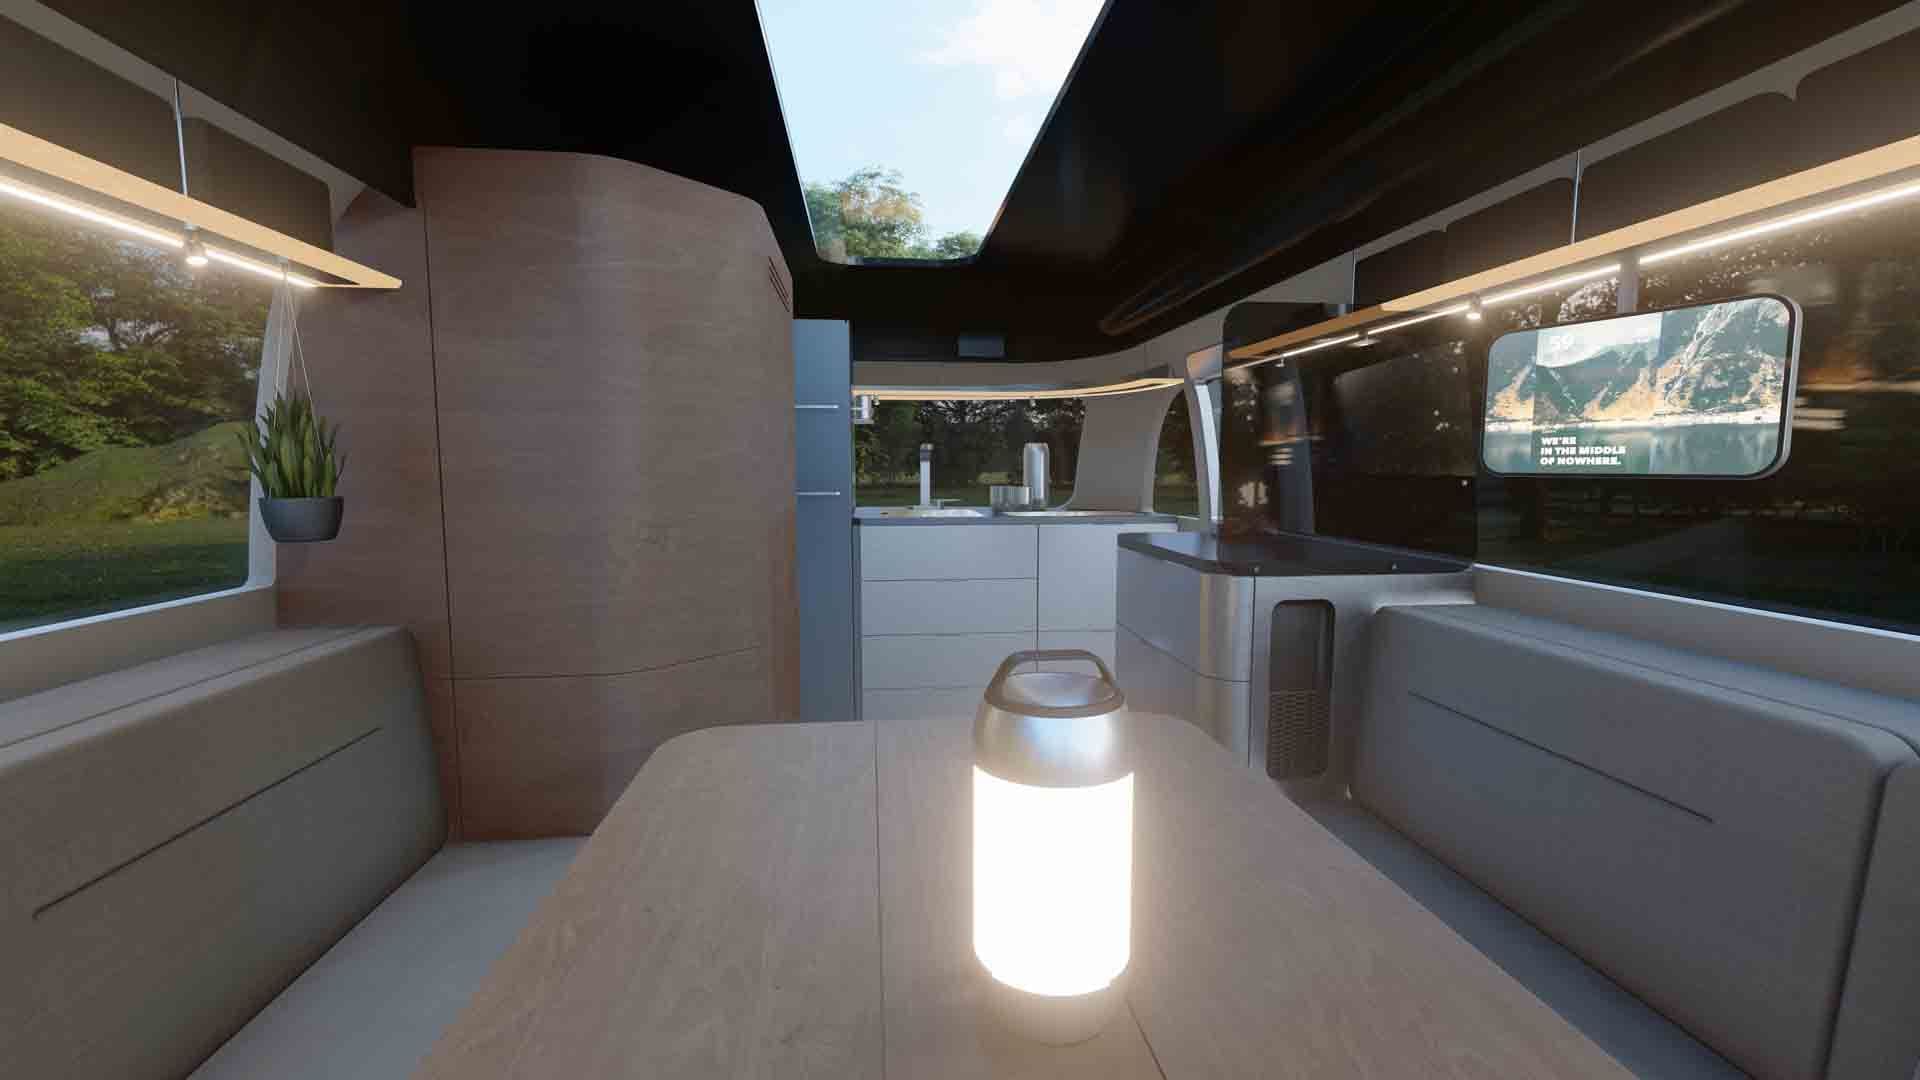 Airstream Studio F. A. Porsche Concept Travel Trailer